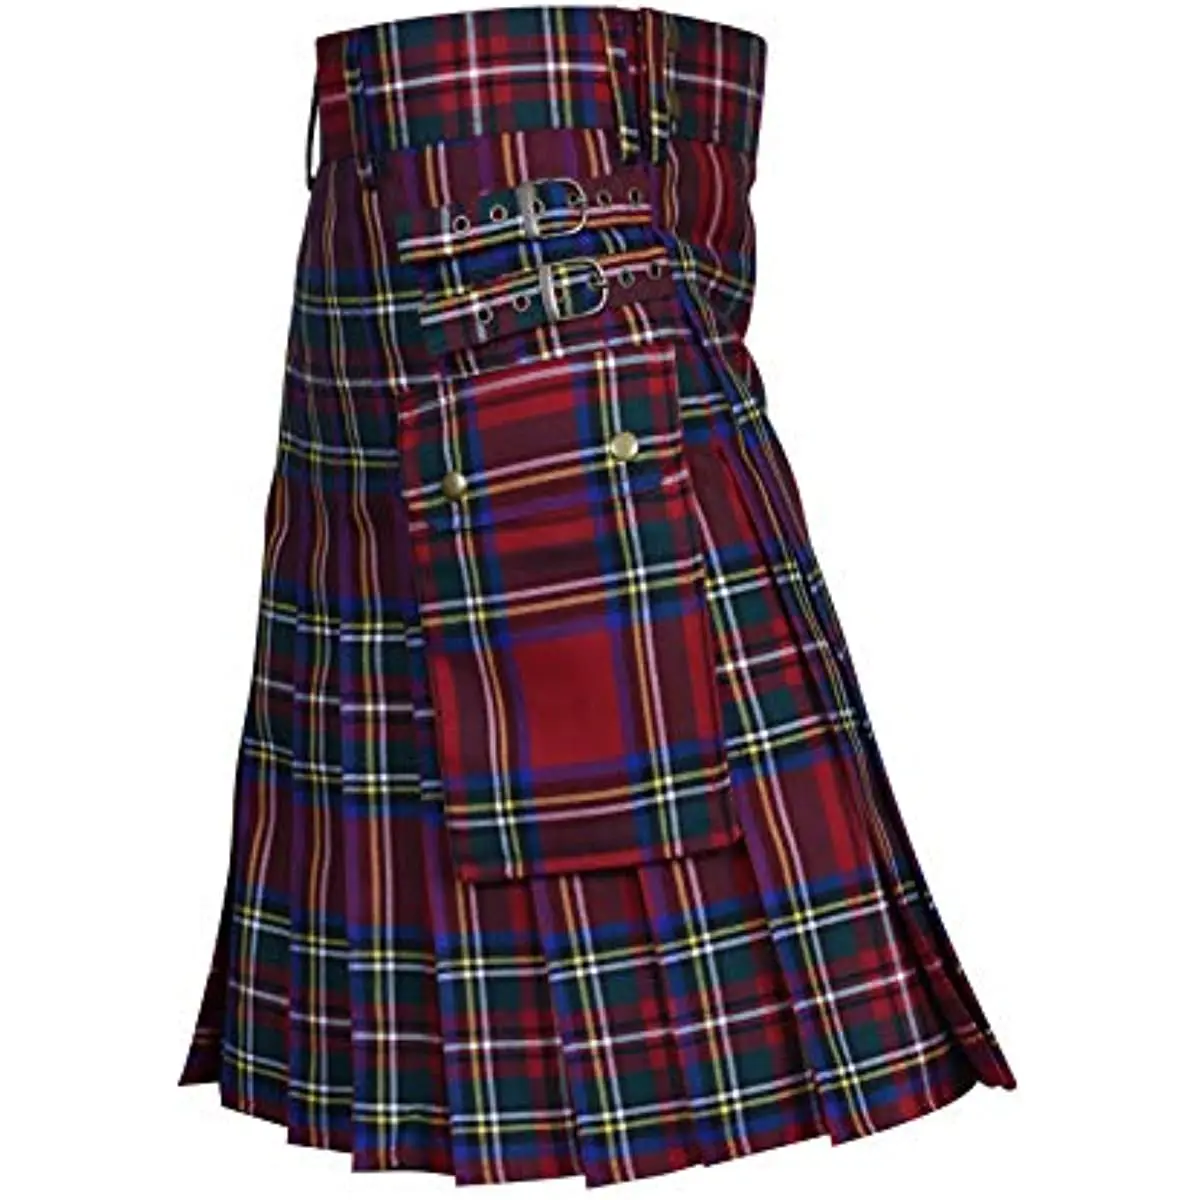 Kilt for Men Tartan Poly Viscose Premium Quality Scottish Utility Kilt Traditional Highland Men's Kilt